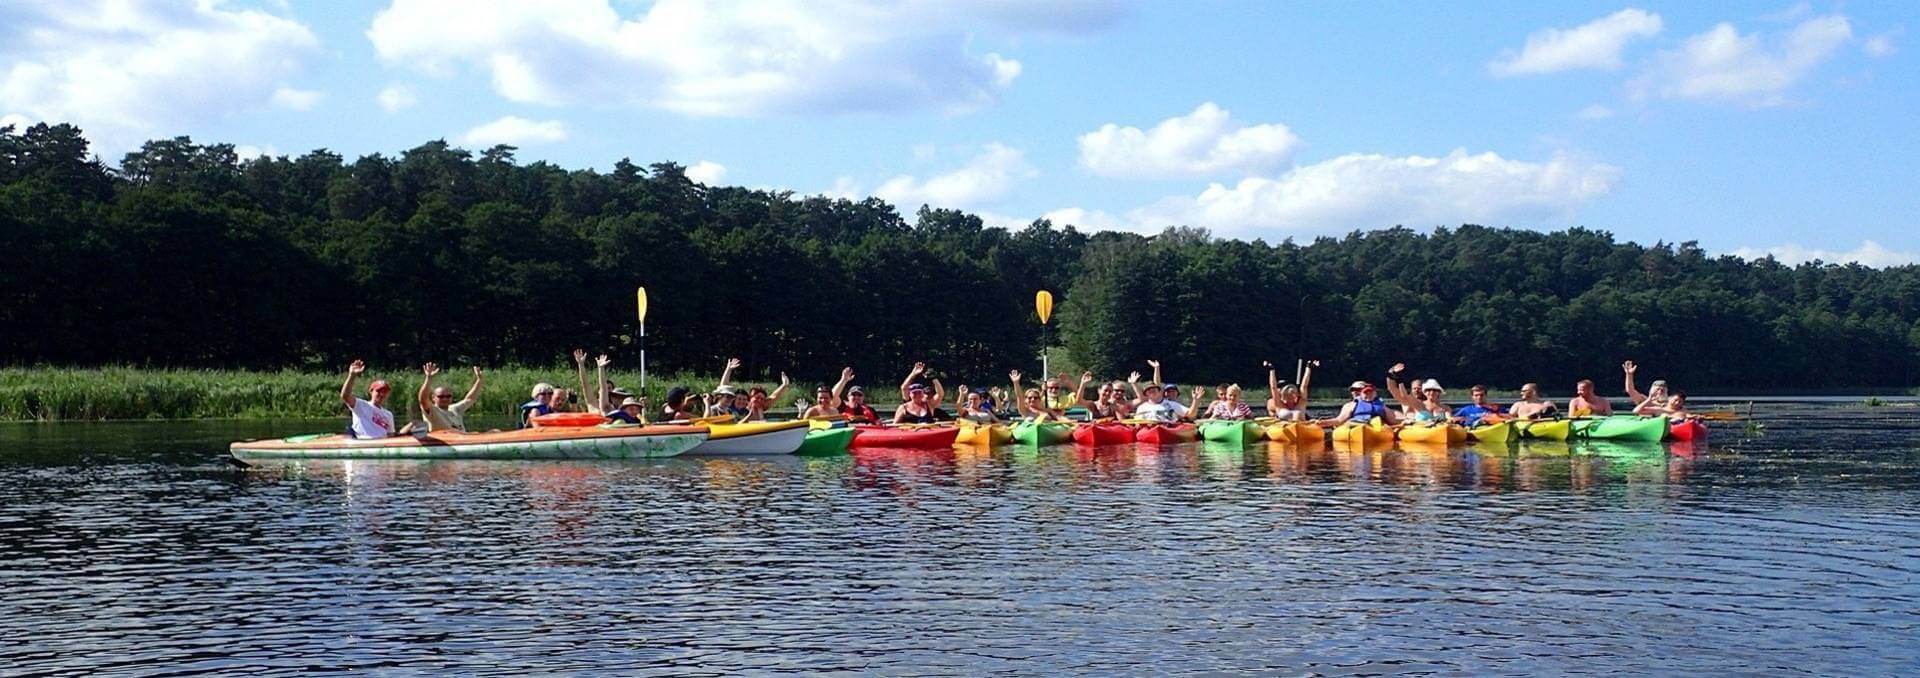 8-day kayaking trips down the Krutynia river